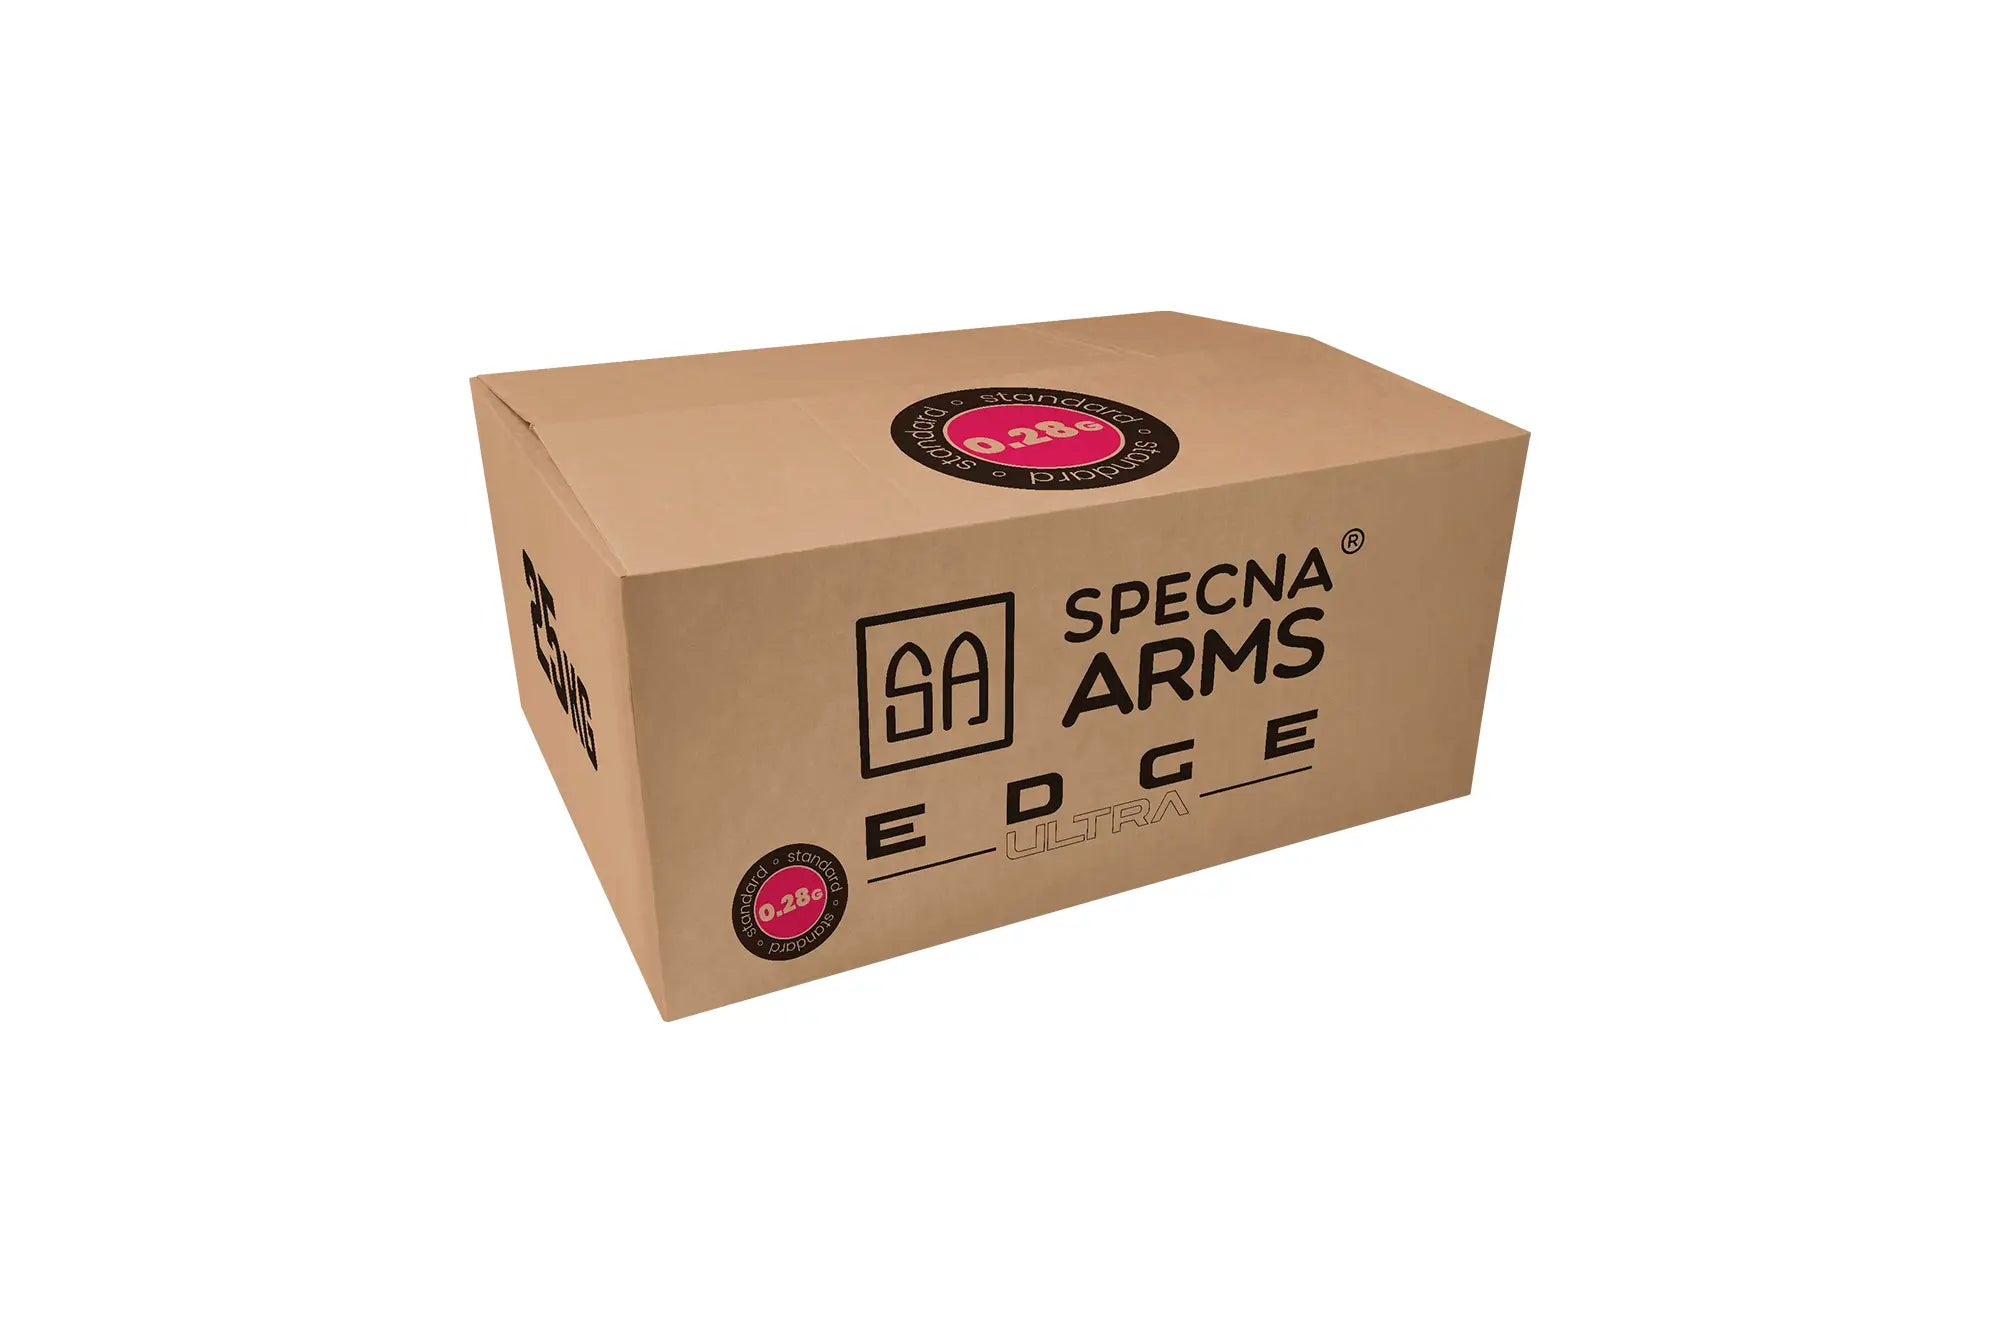 Specna Arms BBs EDGE ULTRA 0.28g - 25 kg - white